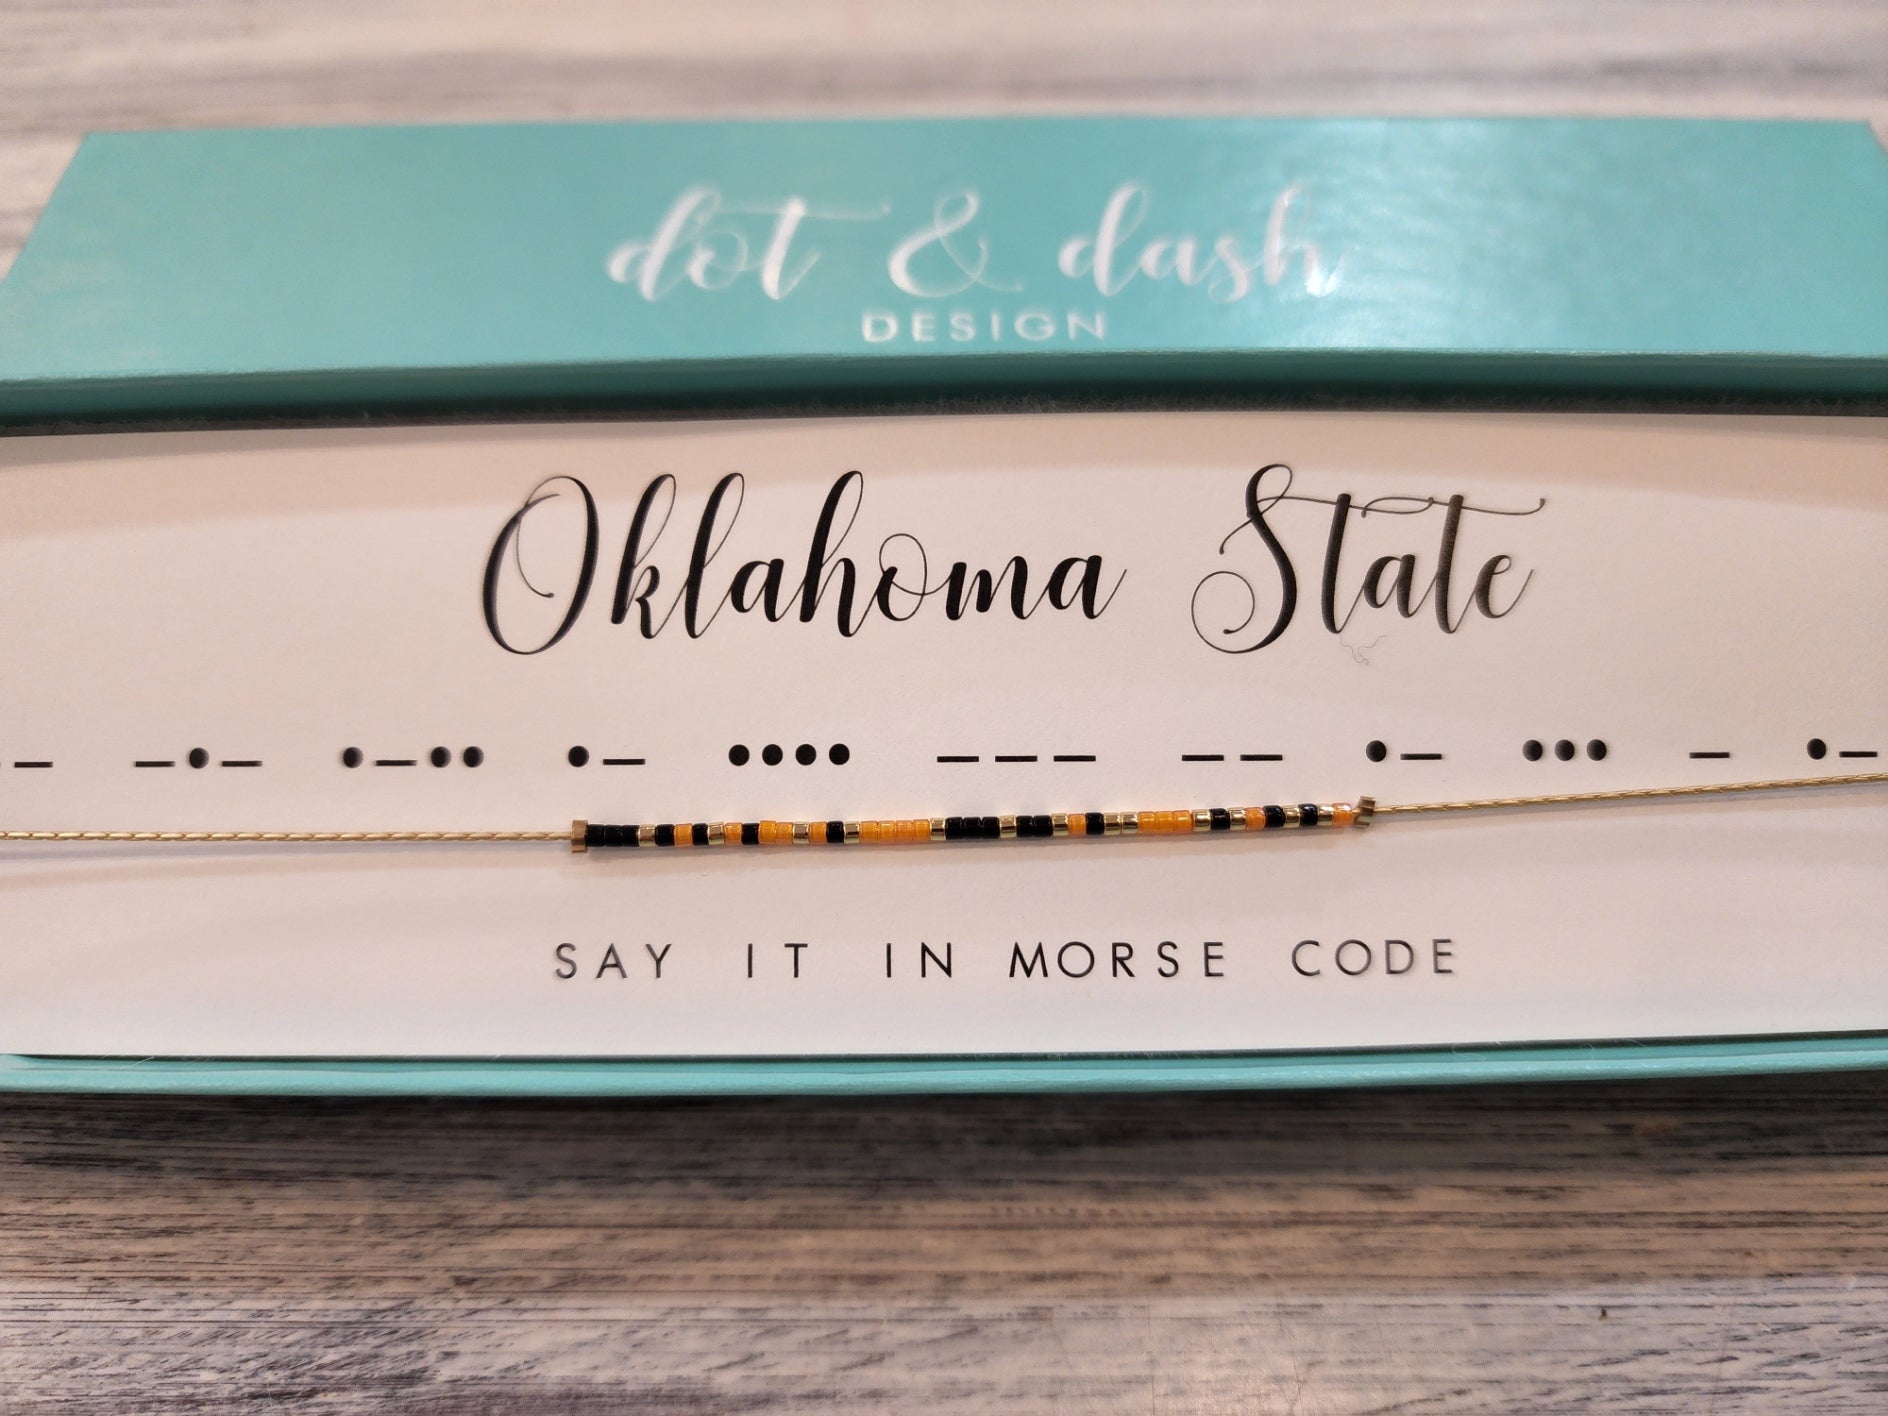 Oklahoma State Dot & Dash Necklace